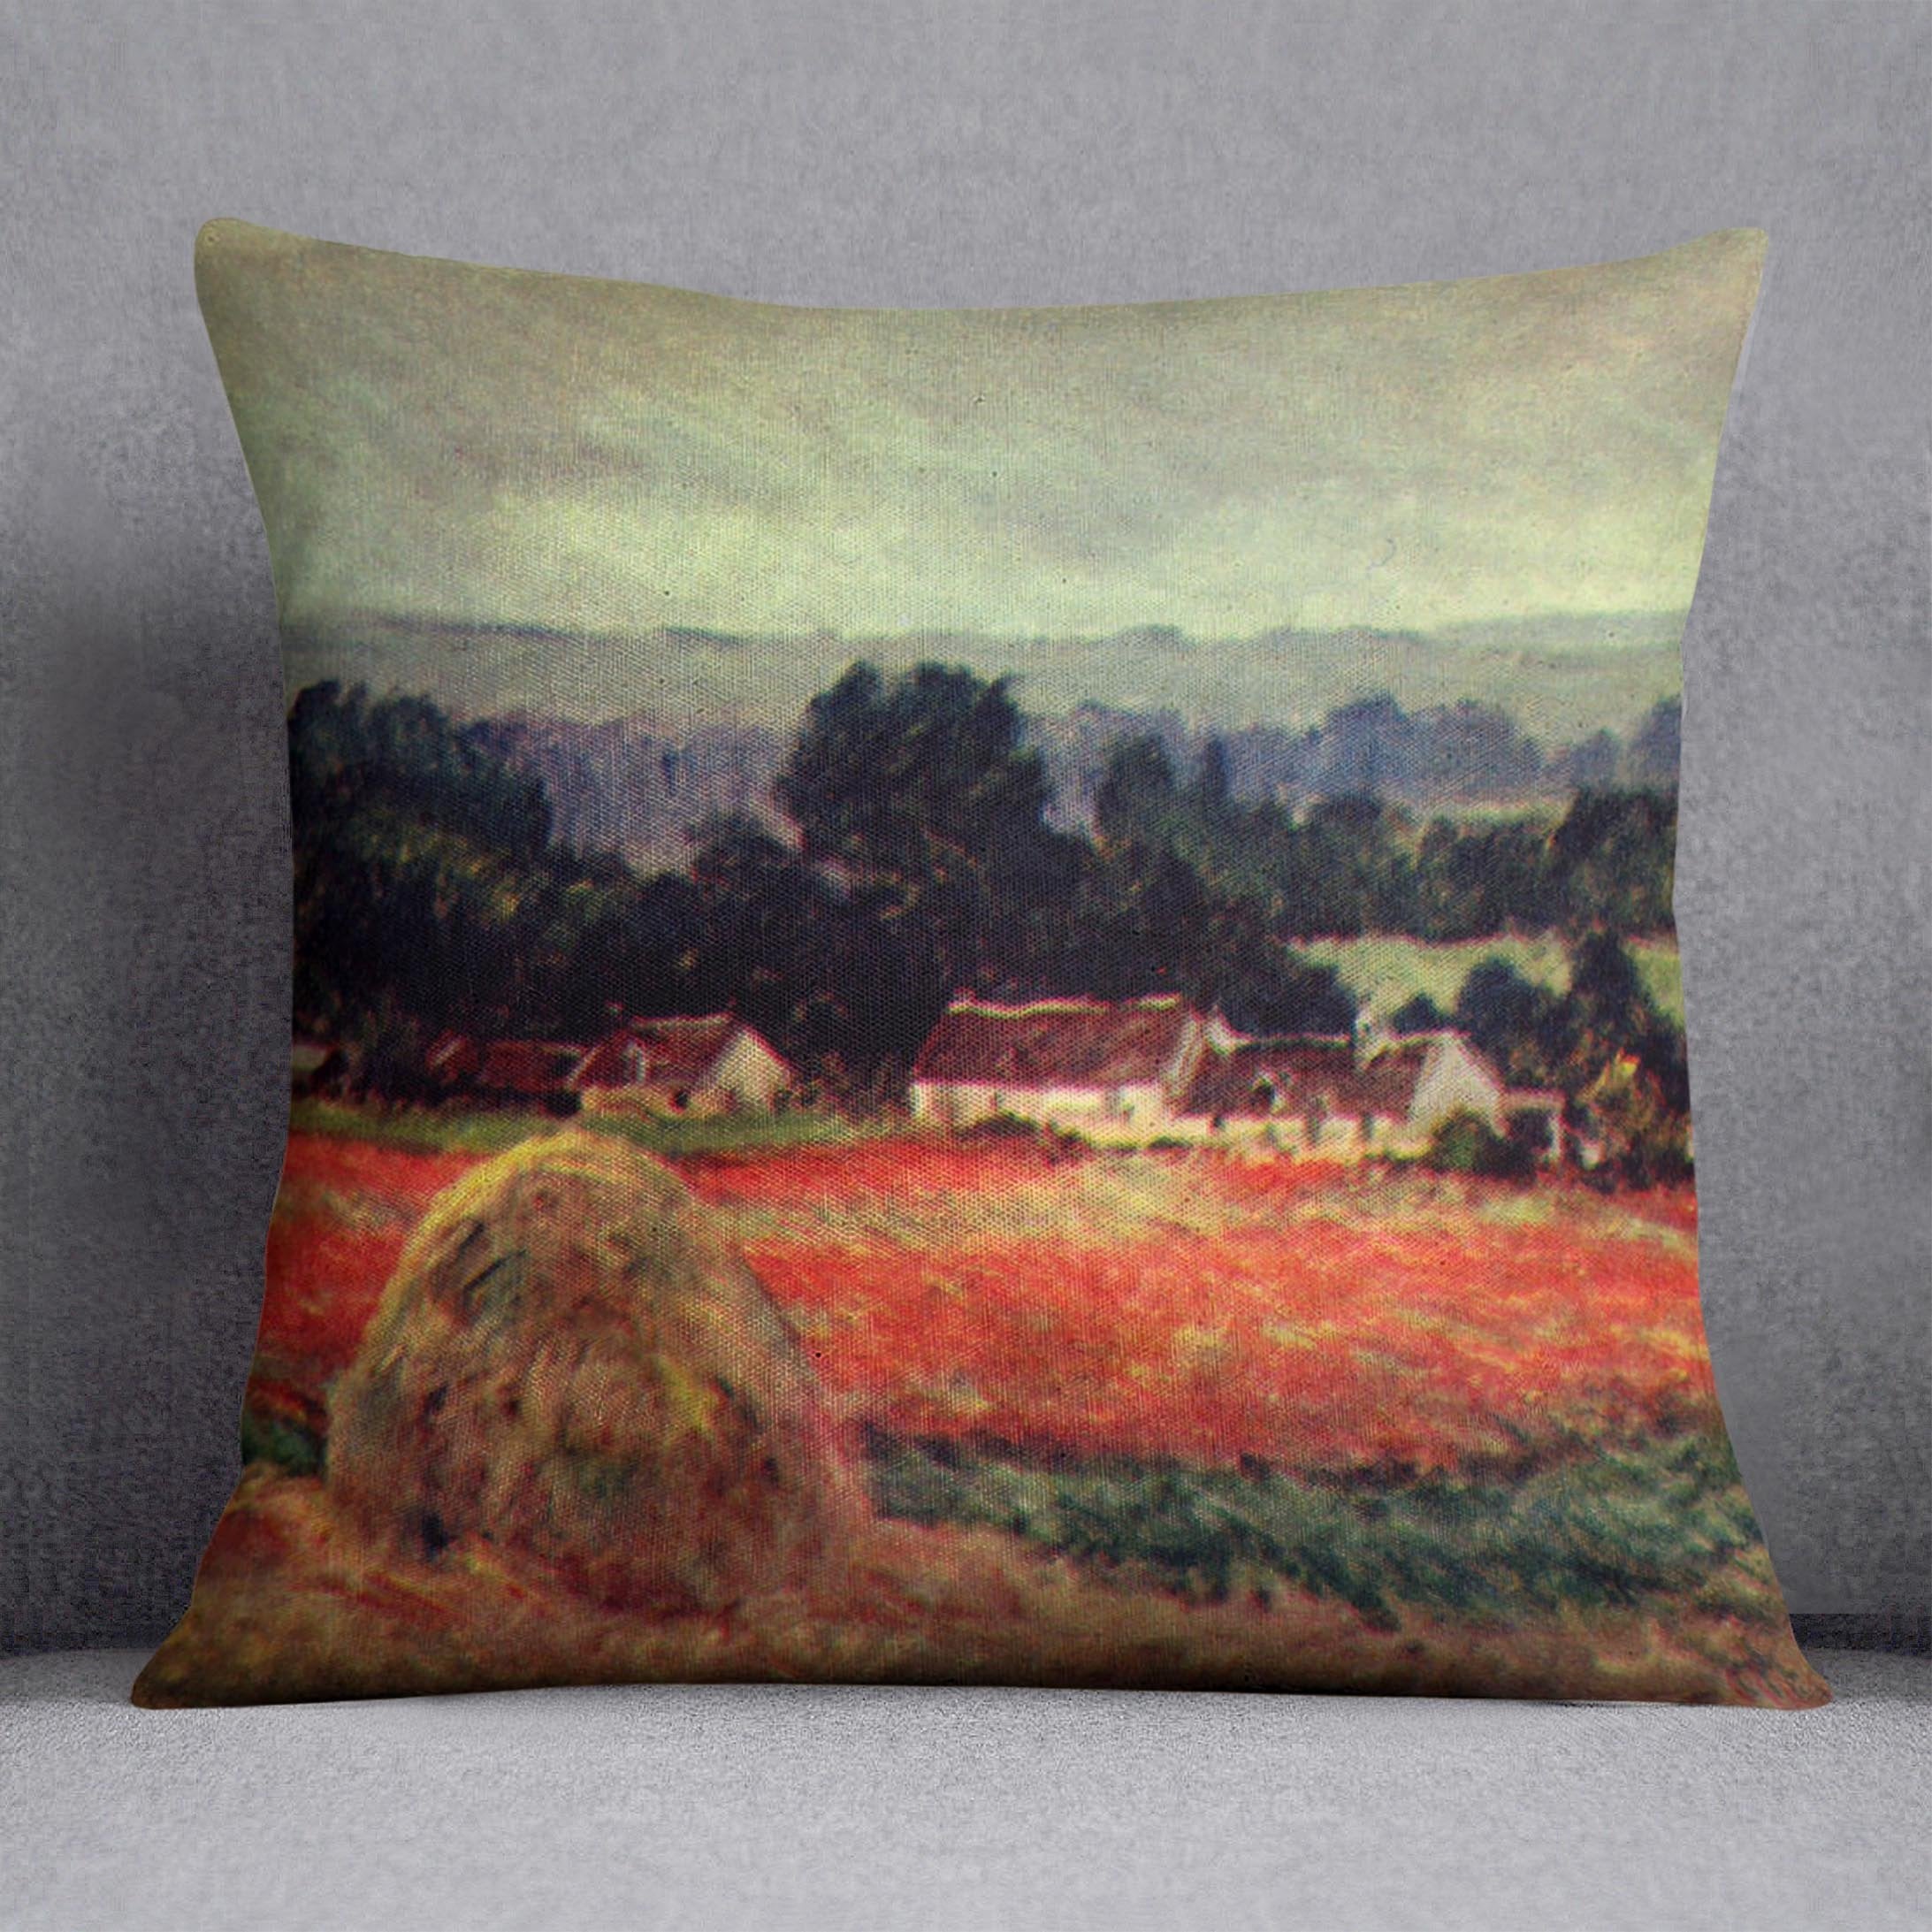 The poppy Blumenfeld The barn by Monet Throw Pillow